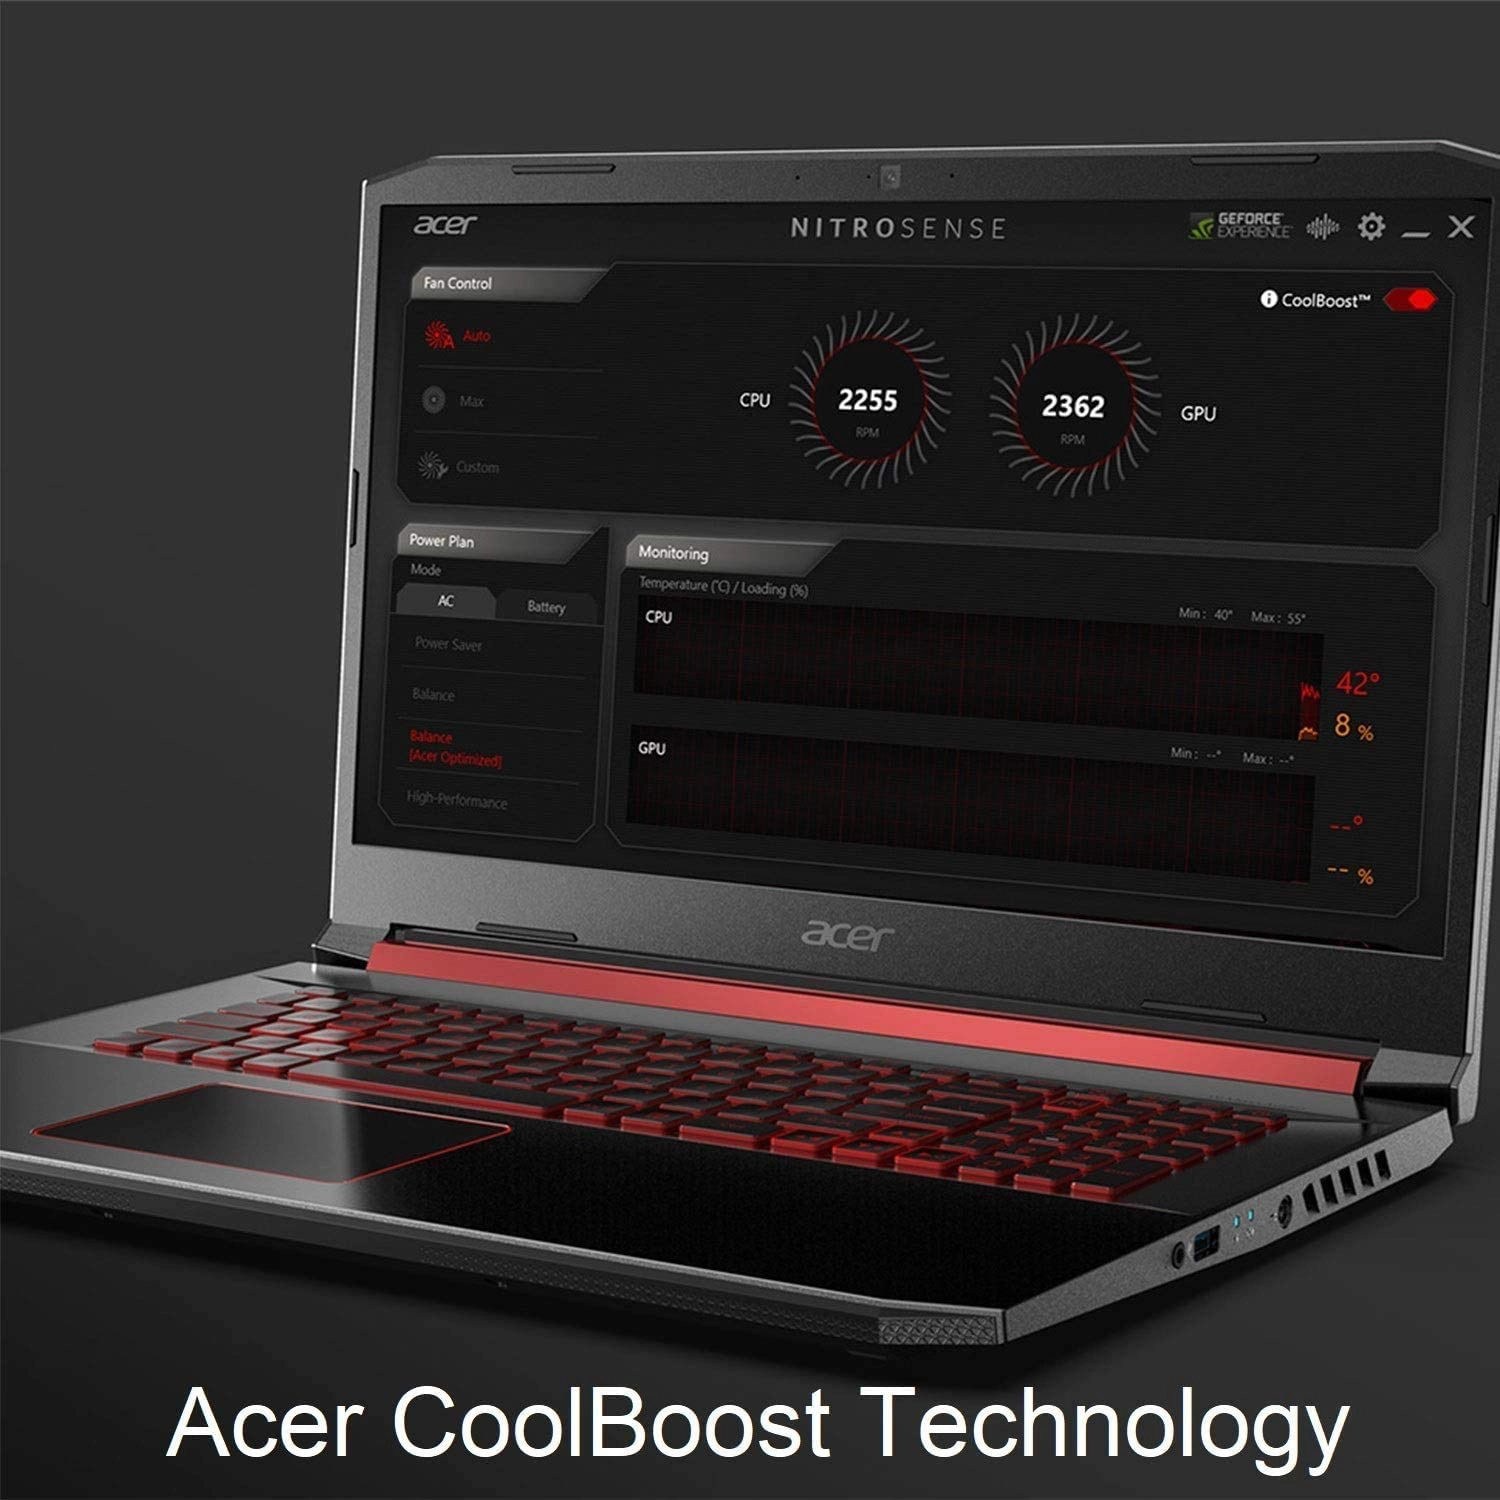 Acer AN515 laptop image